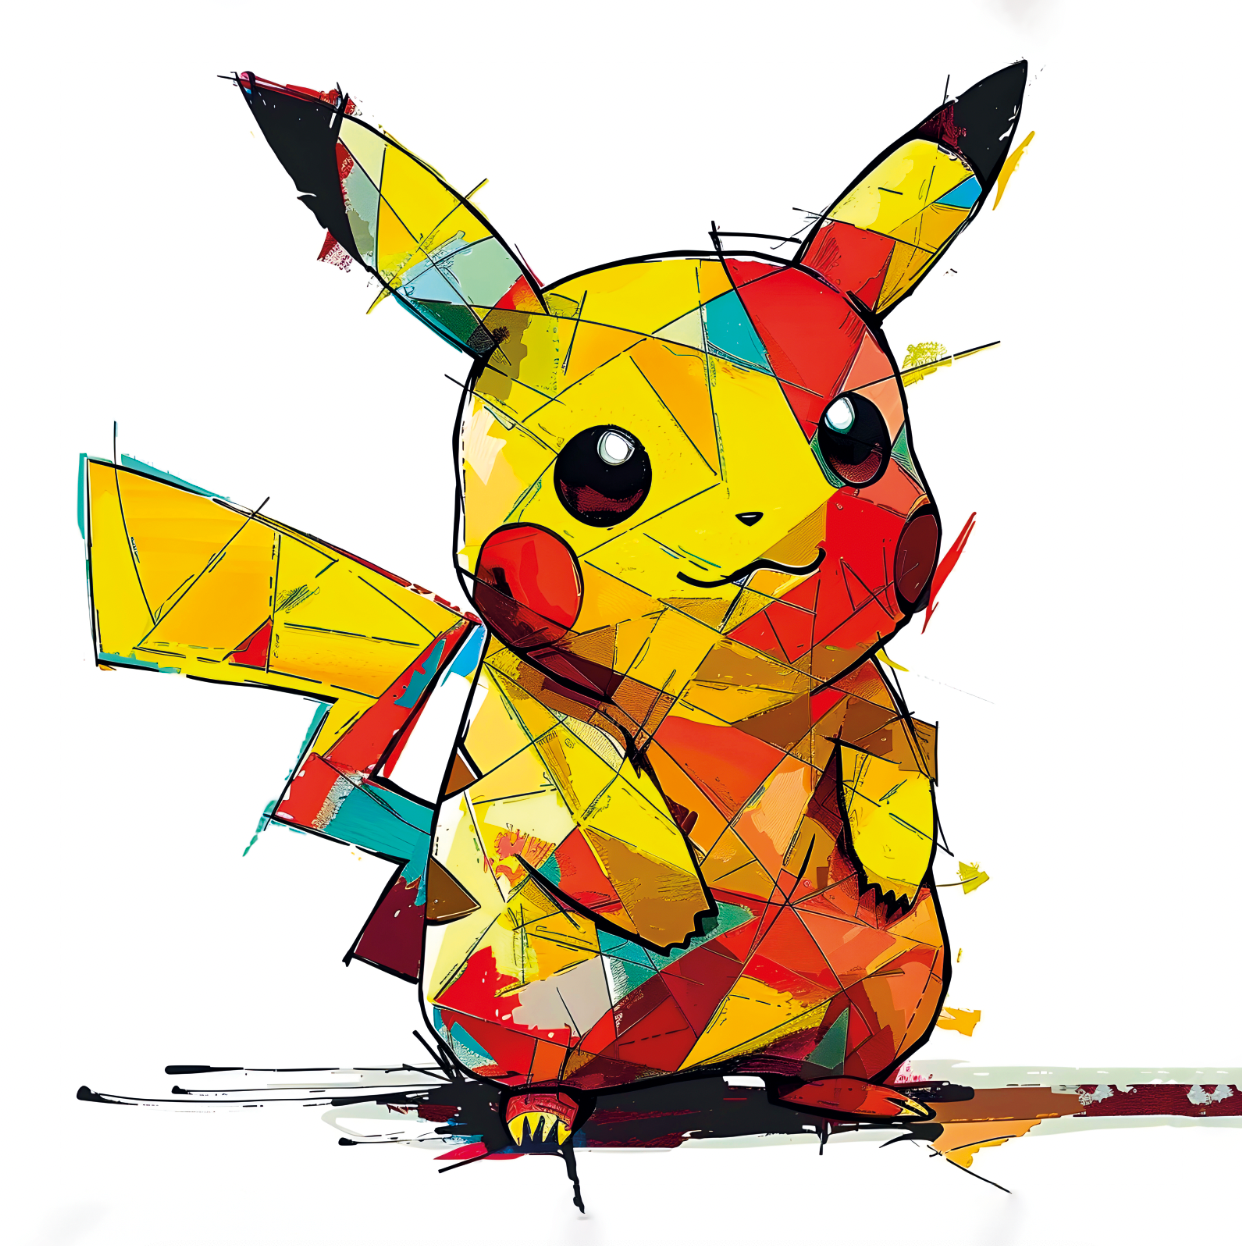 Tableau Pokémon - Pikachu en style cubiste - Fabulartz.fr 